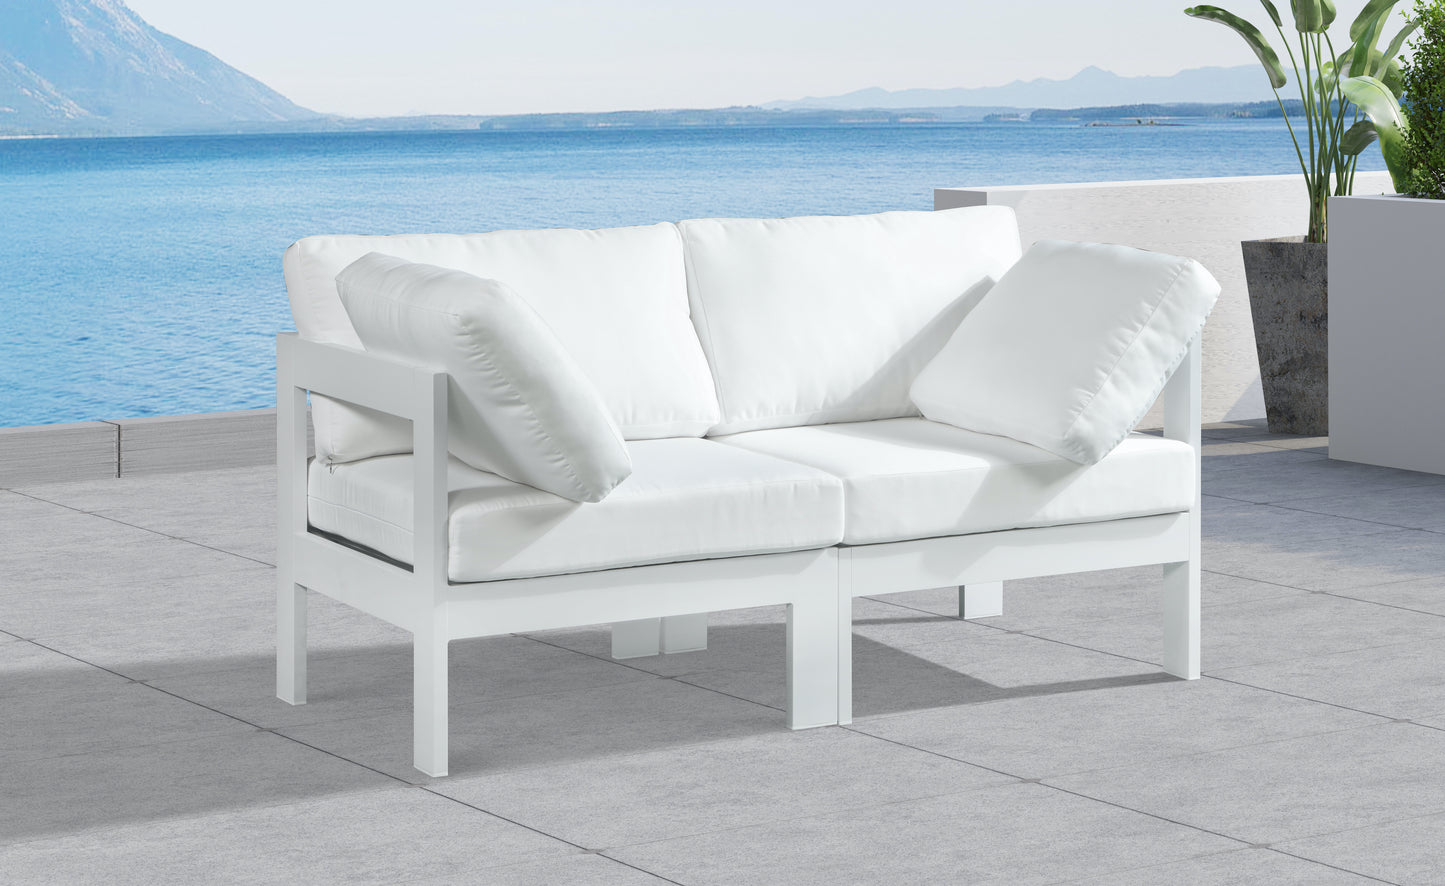 Nizuc Outdoor Patio Aluminum Modular Sofa SKU: 375-S60A